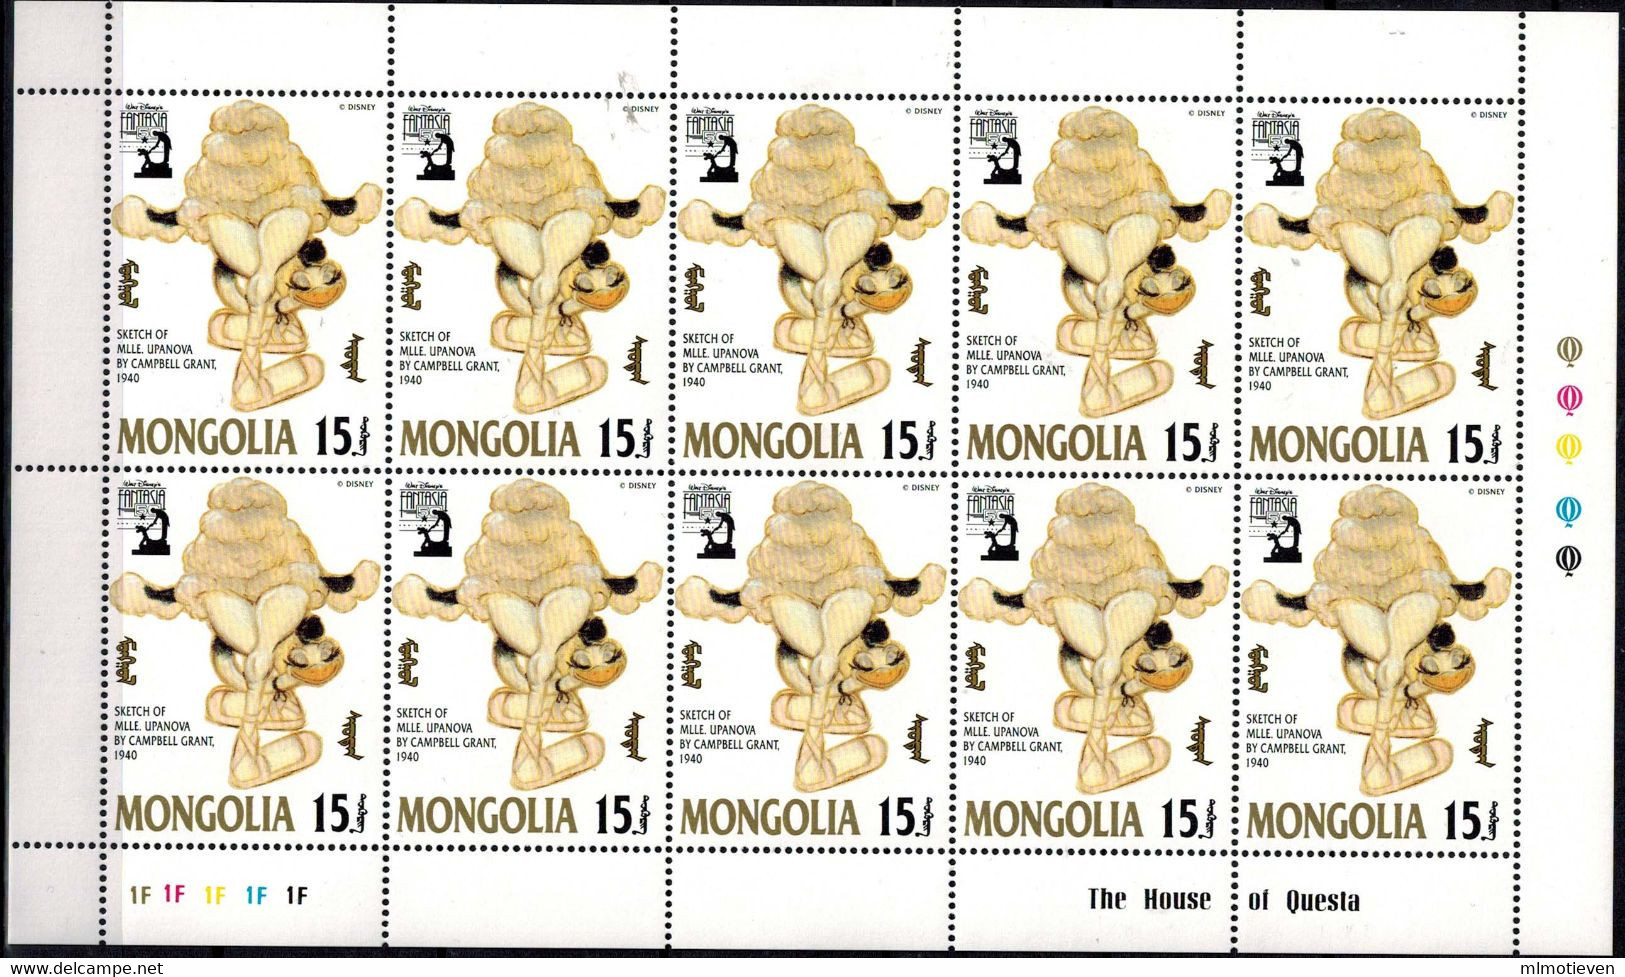 MWD-BK5-319-4 MINT PF/MNH ¤ MONGOLIA 1991 8x10w in sheets ¤ 50TH ANNIVERSARY OF THE WALT DISNEY FILM FANTASIA